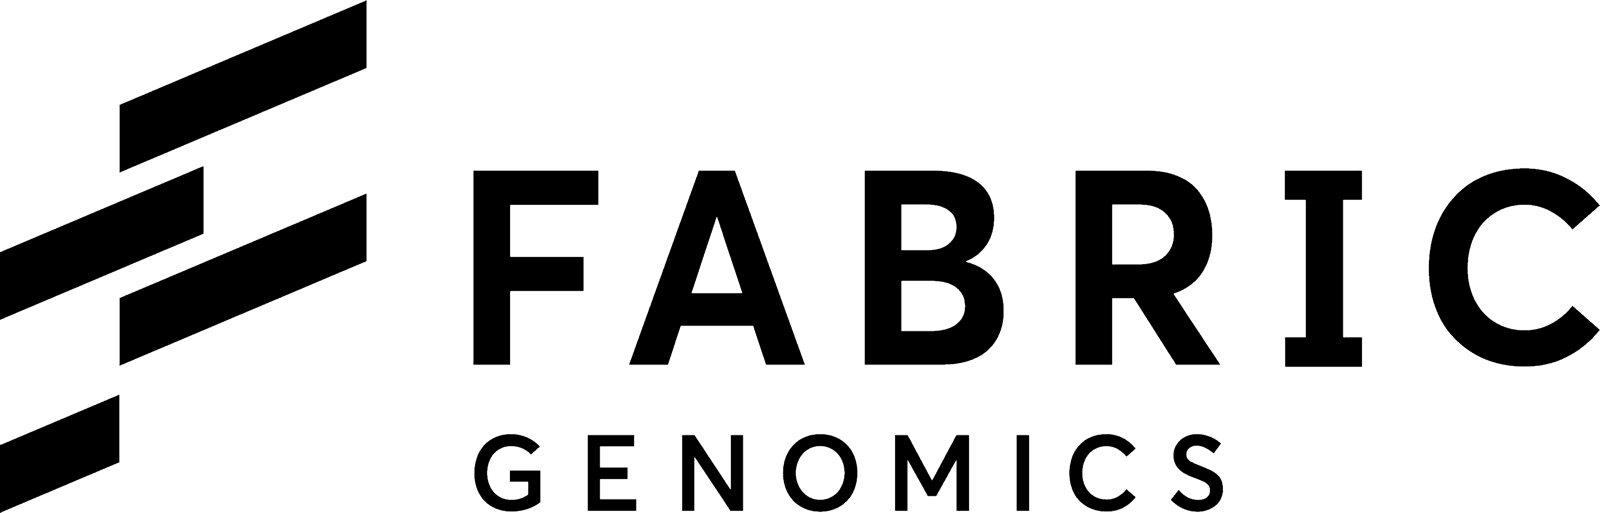 Fabric Genomics-logo-32